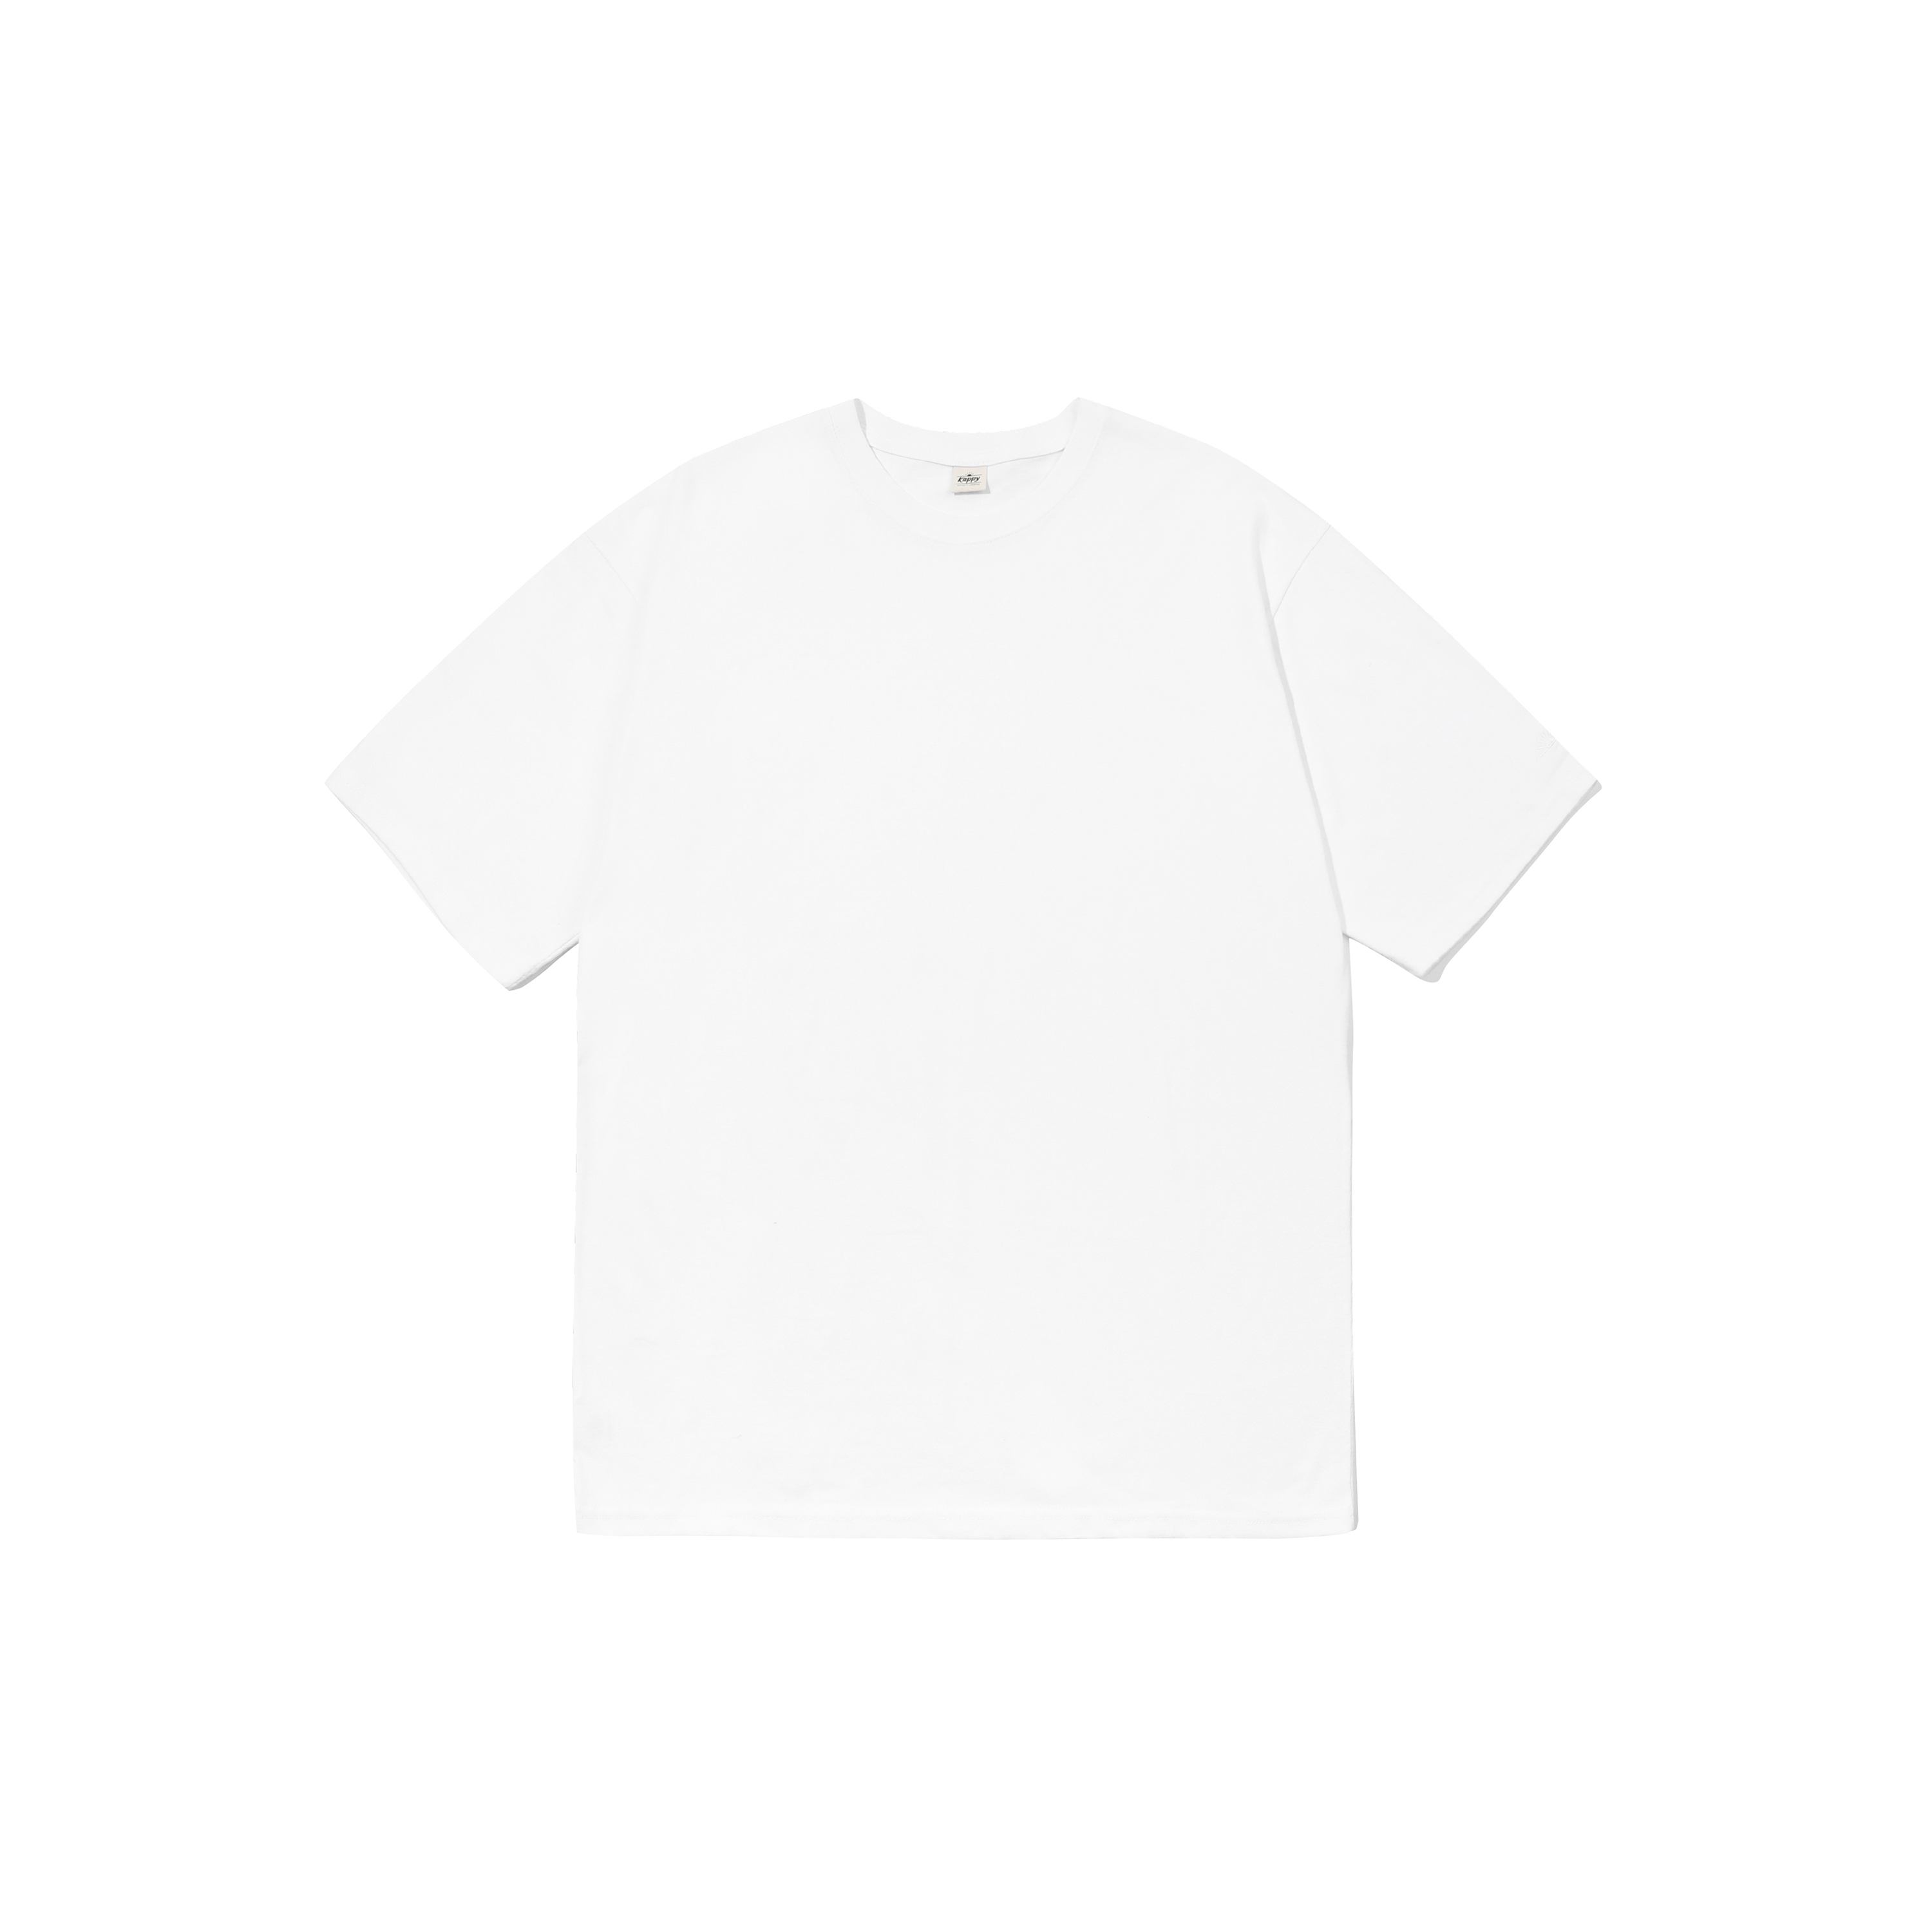 Kappy plain t-shirt white